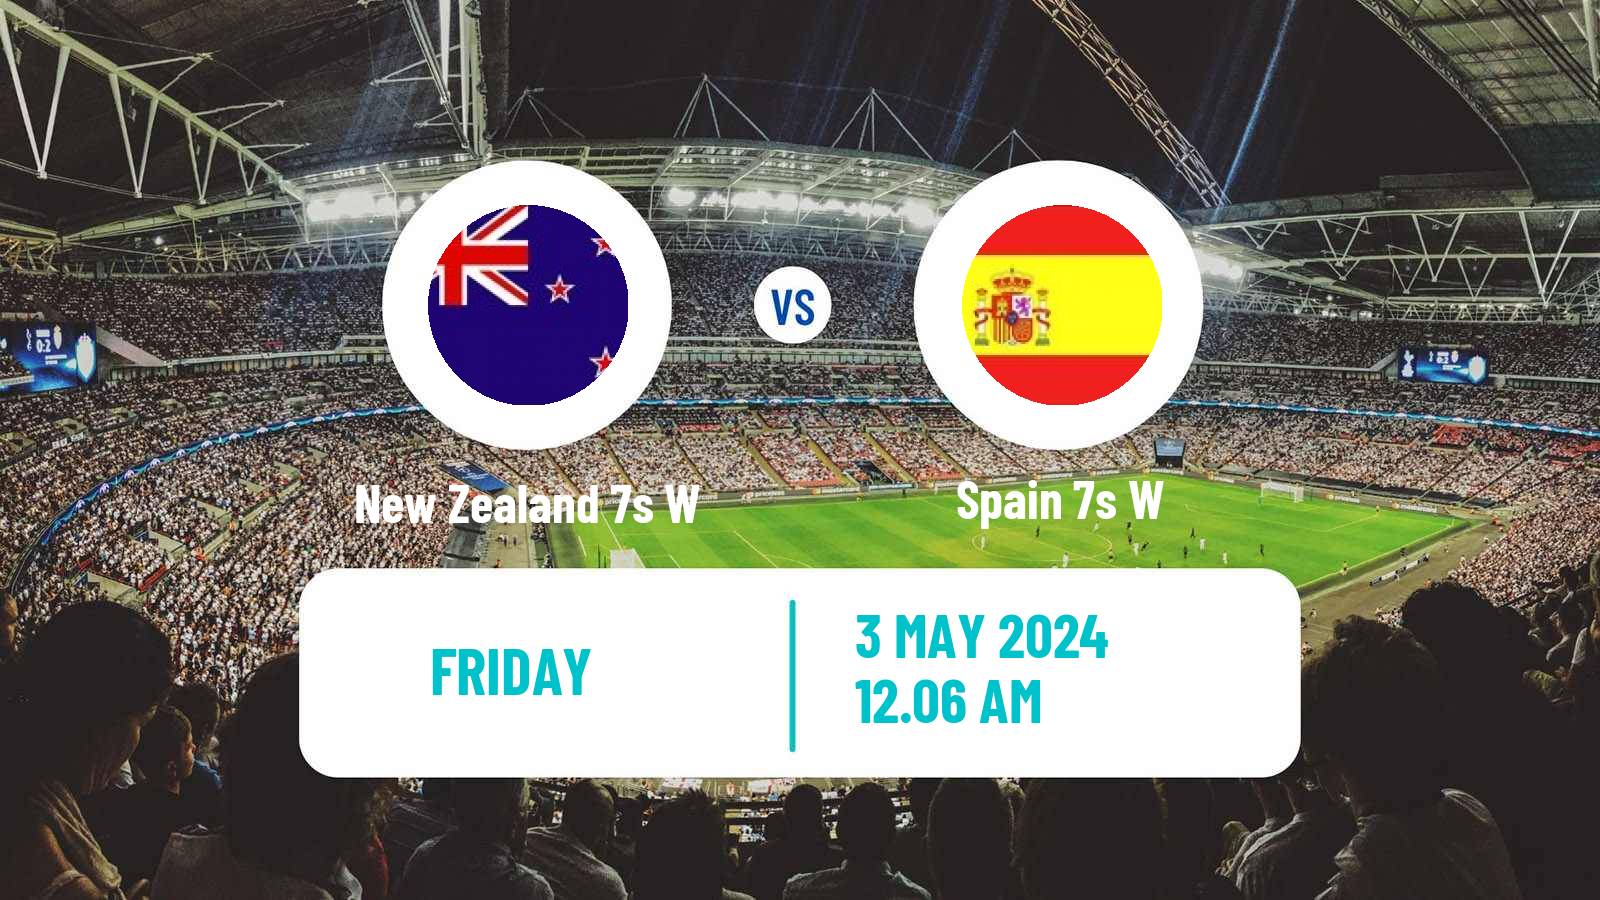 Soccer Sevens World Series Women - Singapore New Zealand 7s W - Spain 7s W